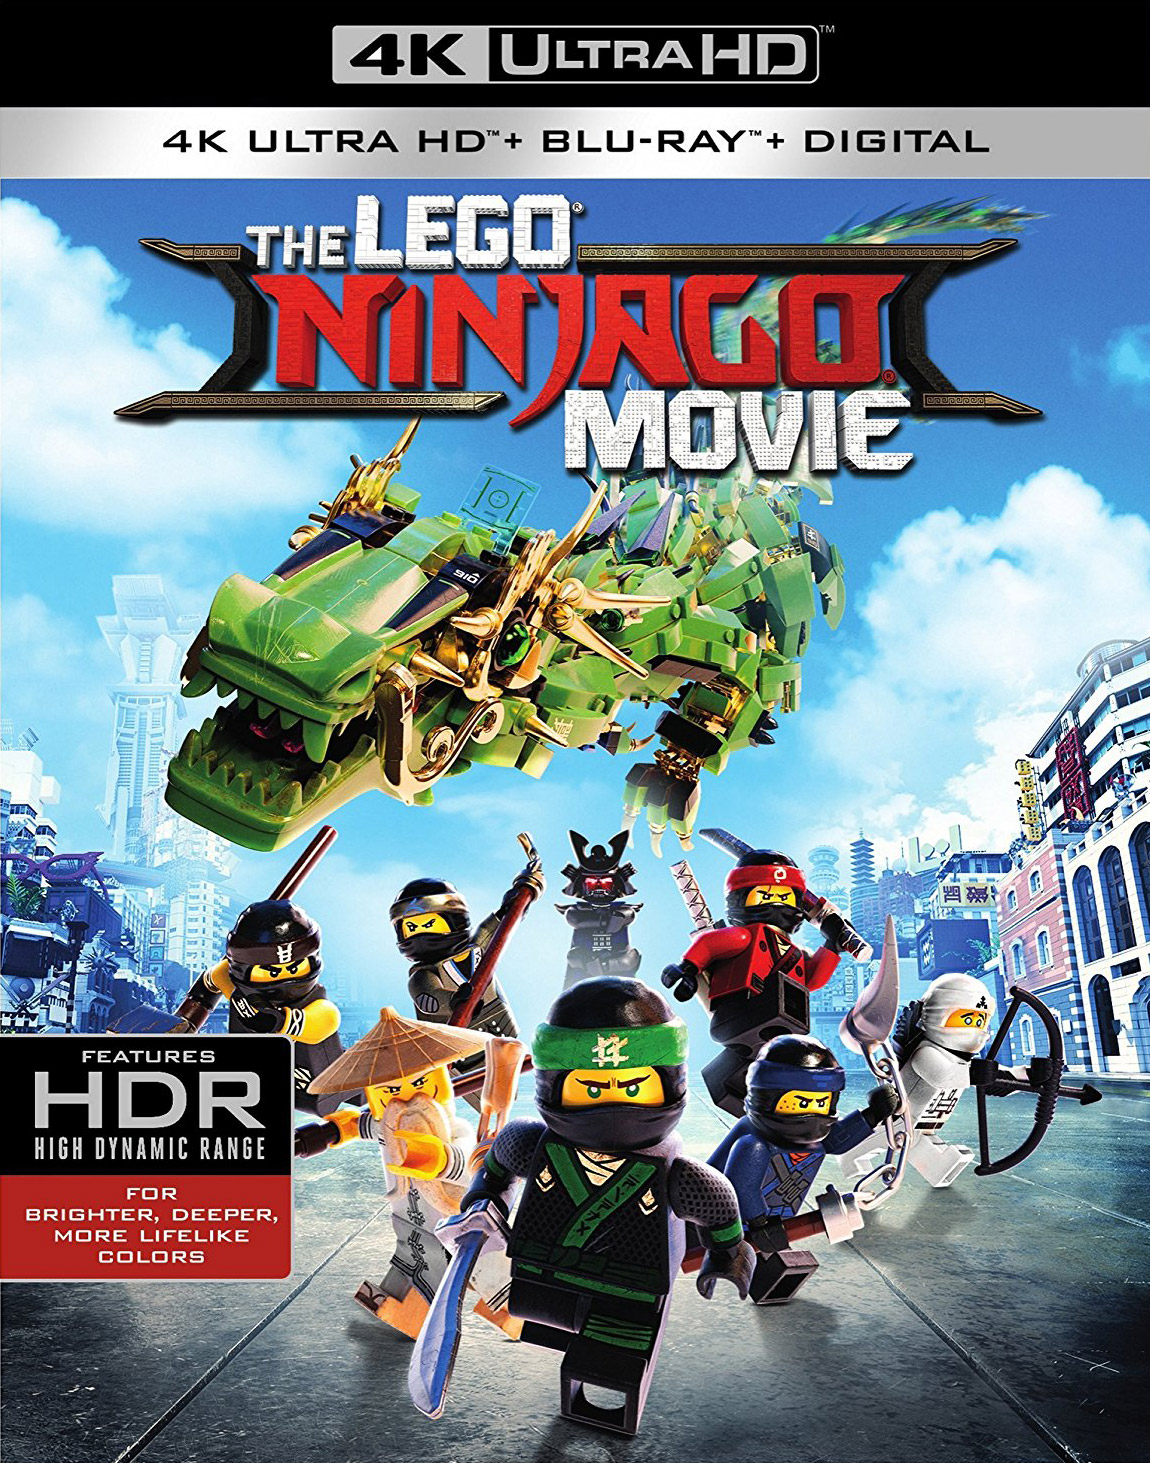 konsulent vaccination morgenmad The Lego Ninjago Movie (2017) 4K Review | FlickDirect